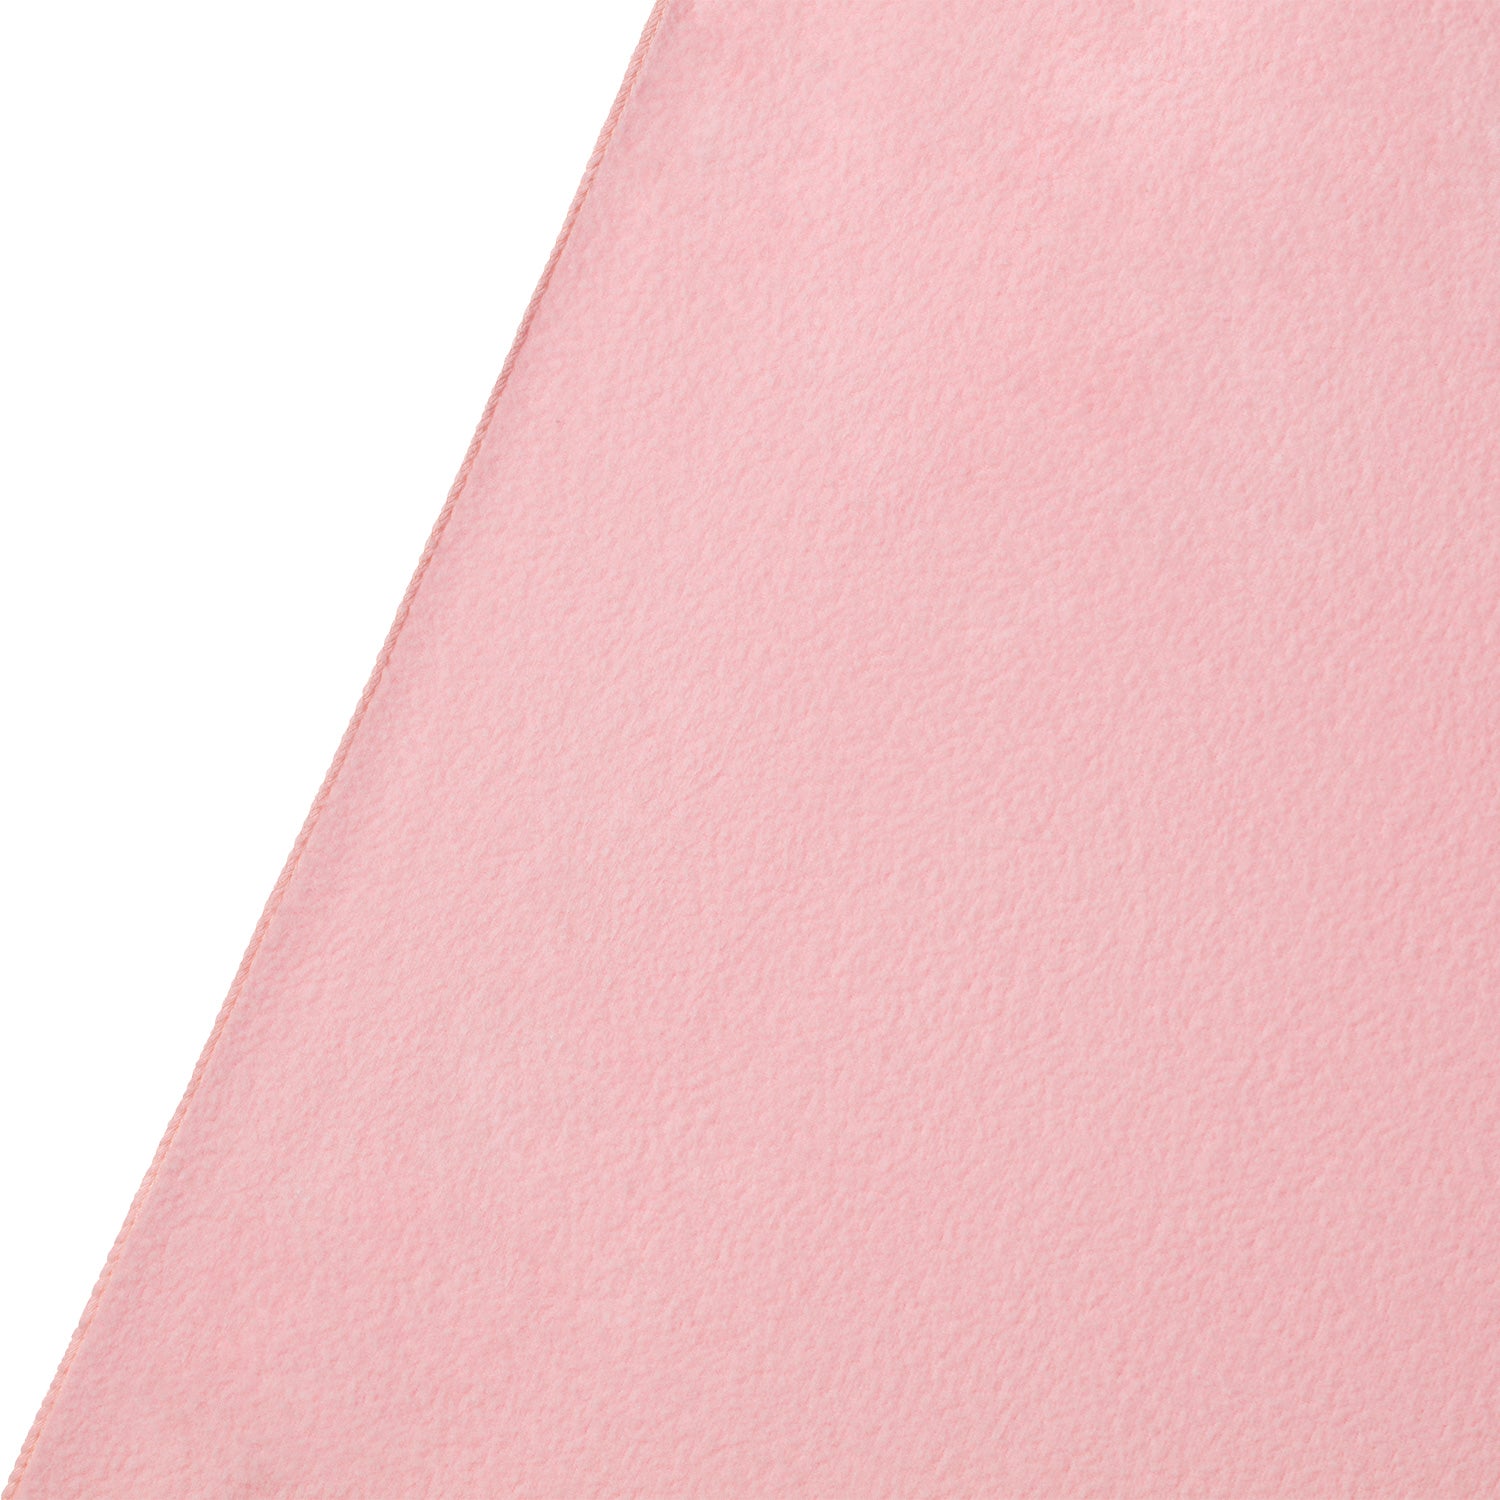 X-Drop Pro Wrinkle-Resistant Backdrop - Blush Pink (8' x 13')